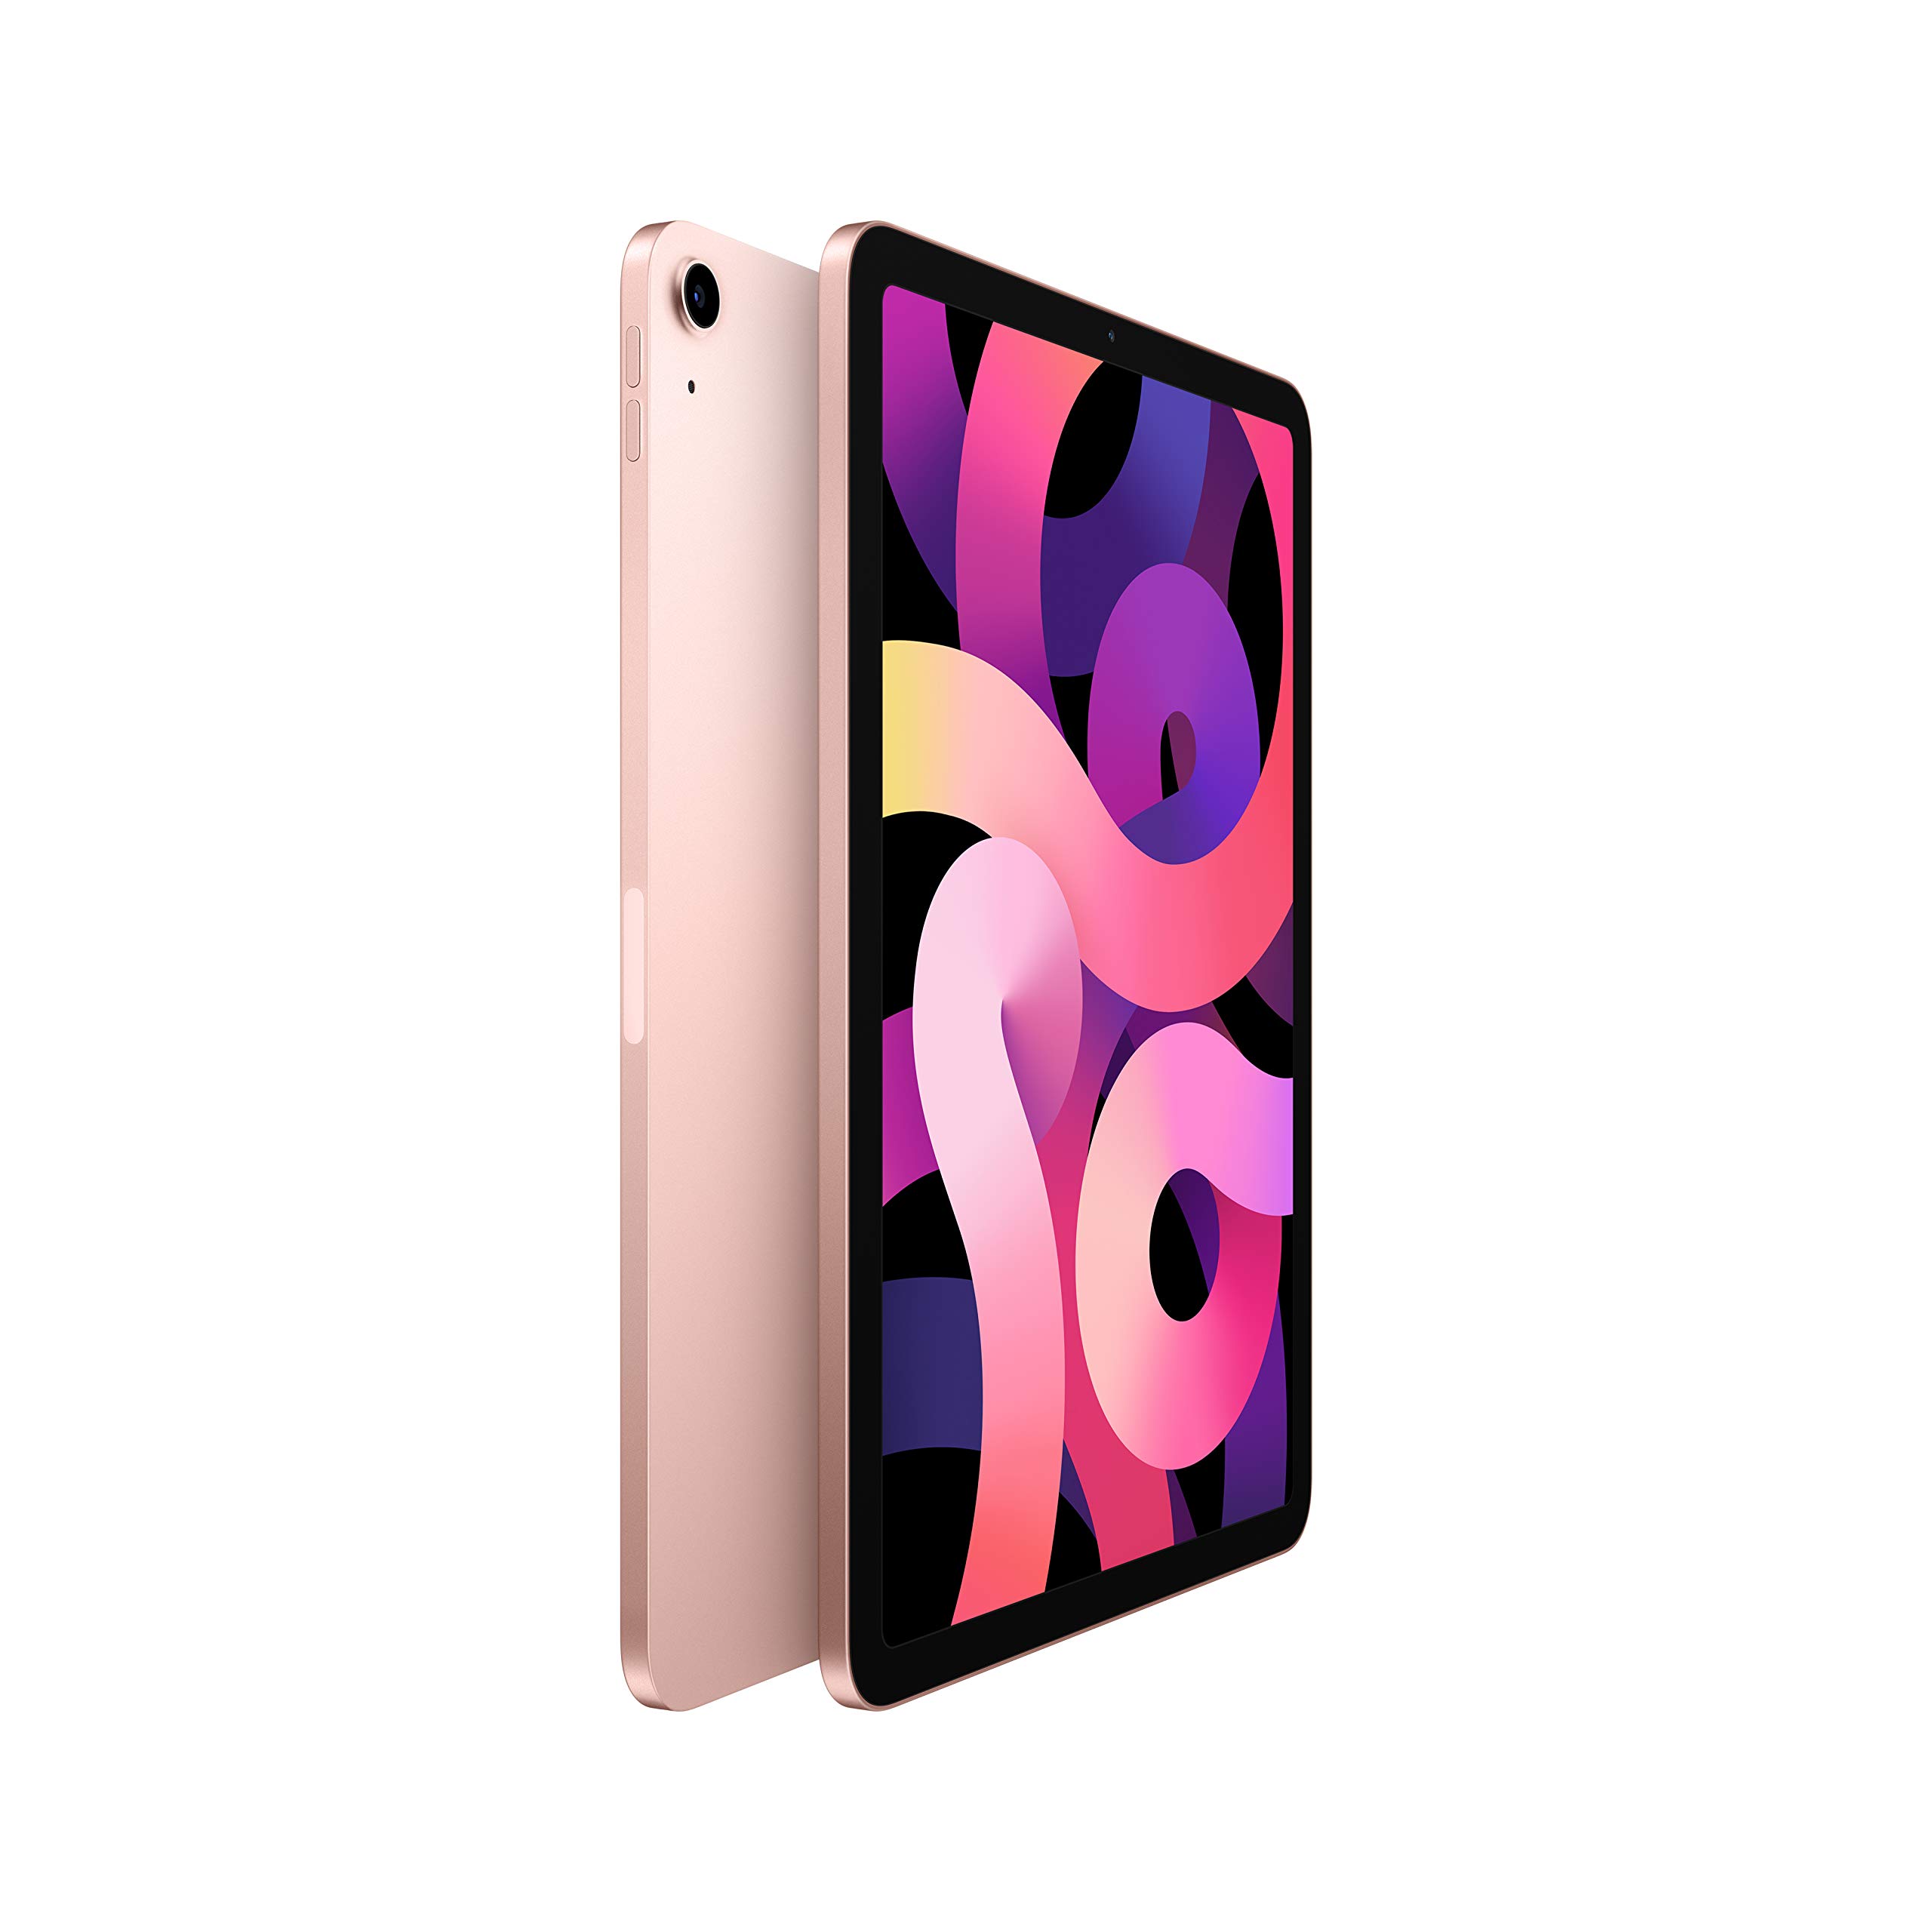 Apple 2020 iPad Air (10.9-inch, Wi-Fi, 64GB) - Gold (4th Generation)